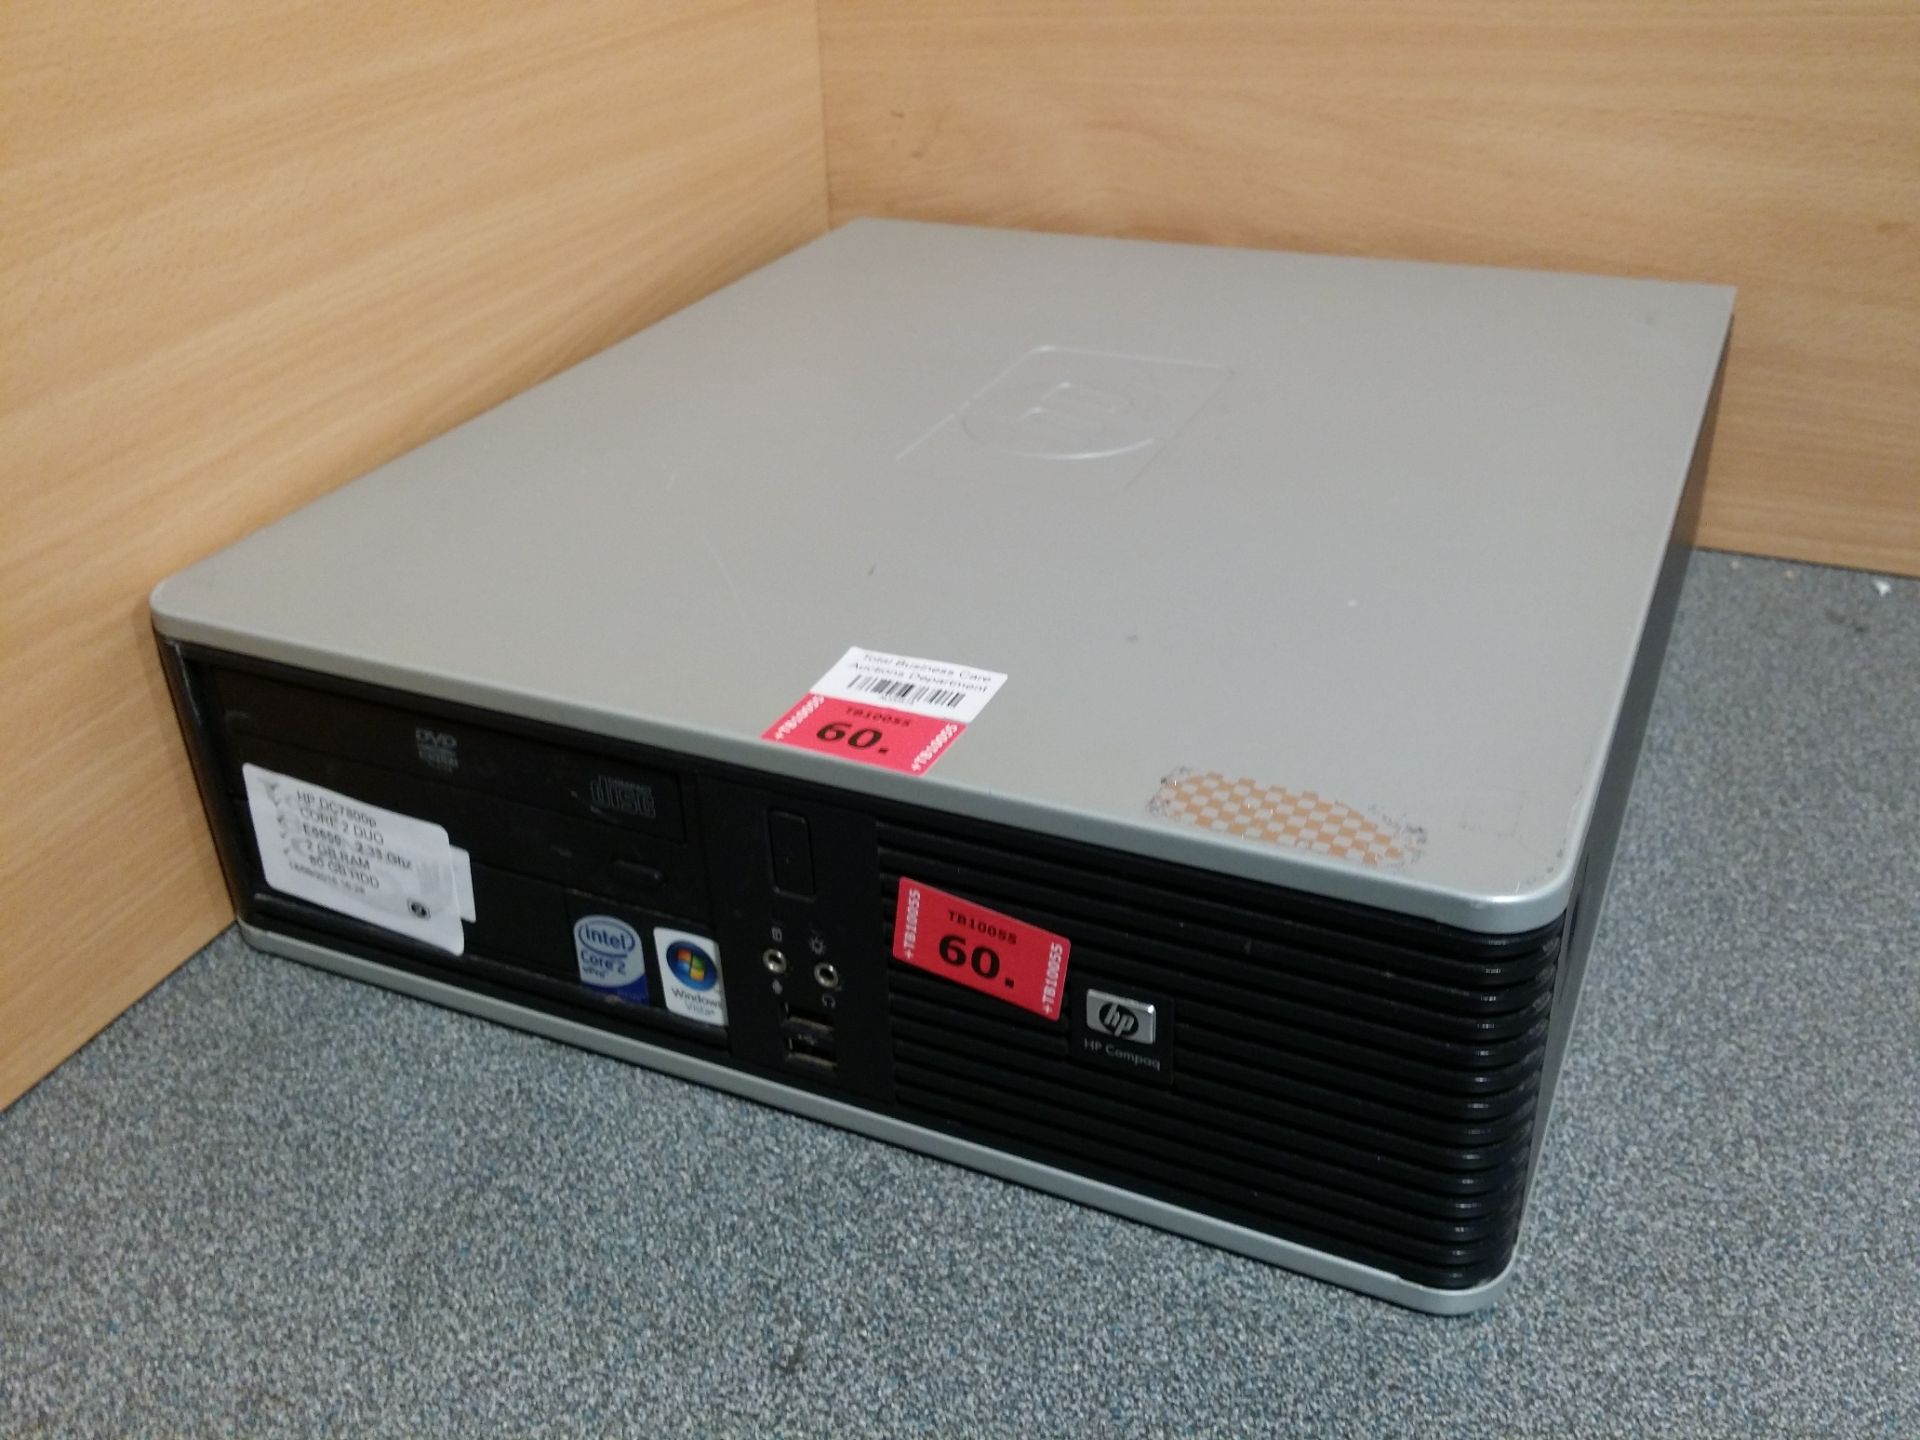 HP DC5800 Desktop Computer - Intel Core 2 Duo 2.33Ghz - 2GB Ram - 80GB Hdd - DVD-RW - Powers On